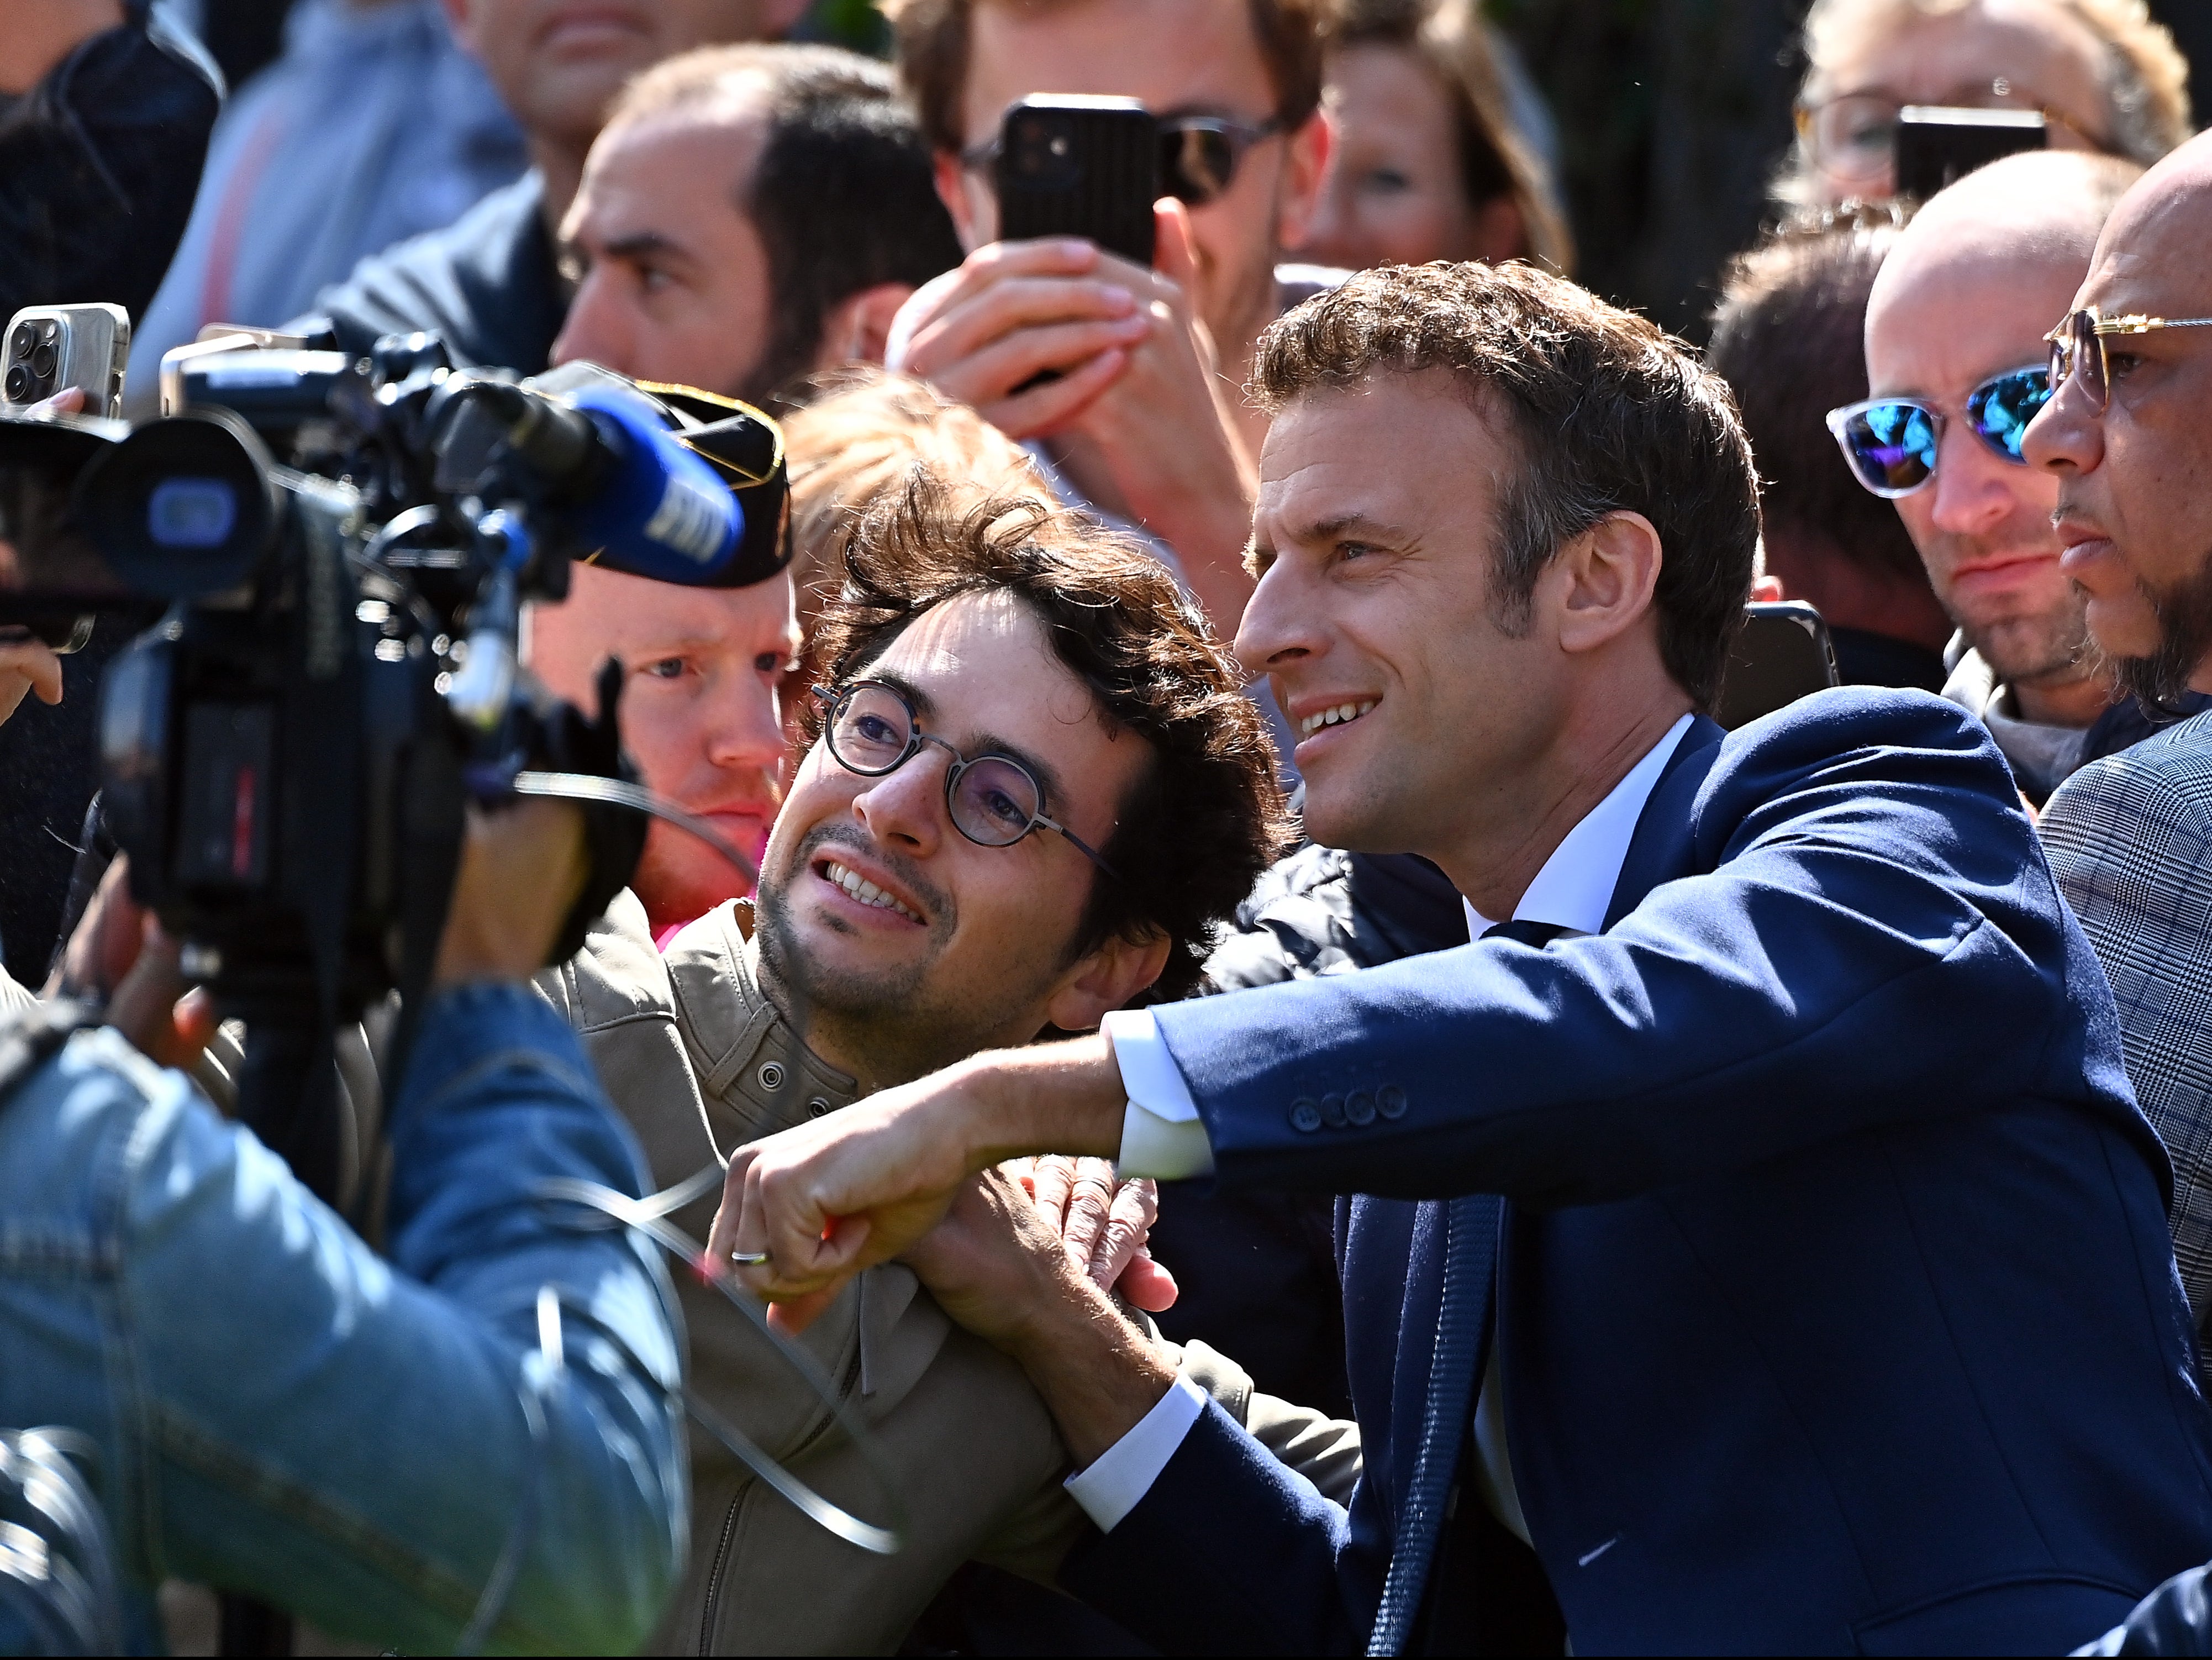 Emmanuel Macron meets voters as he leaves his house to vote